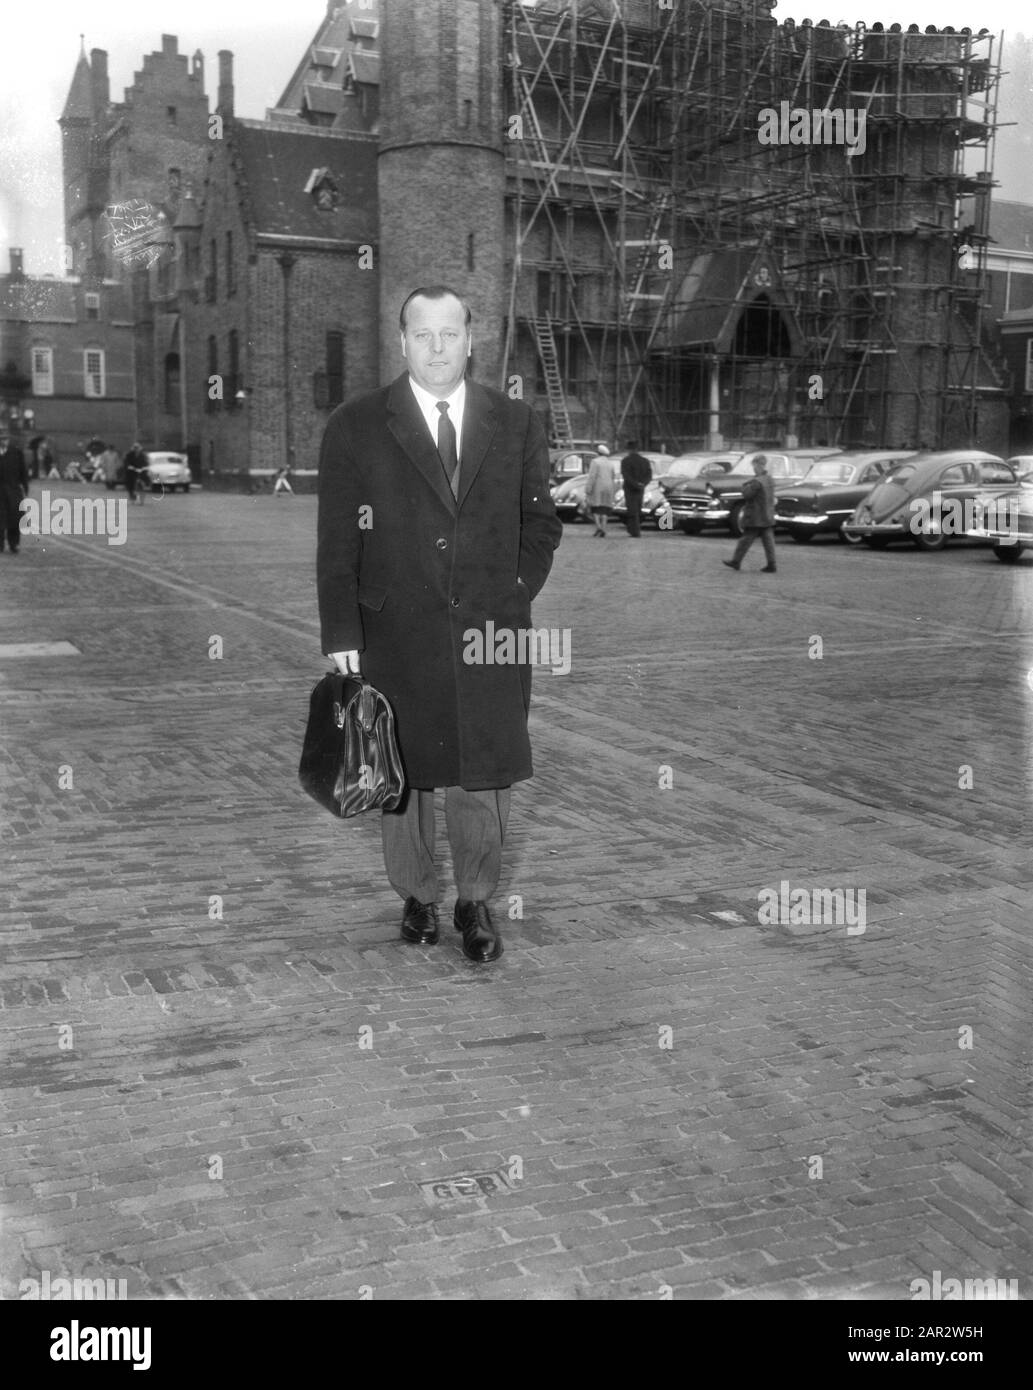 Cabinet Formateur receives several min. candidates mi. P. A. Blaisse on his arrival Date: 10 April 1959 Stock Photo